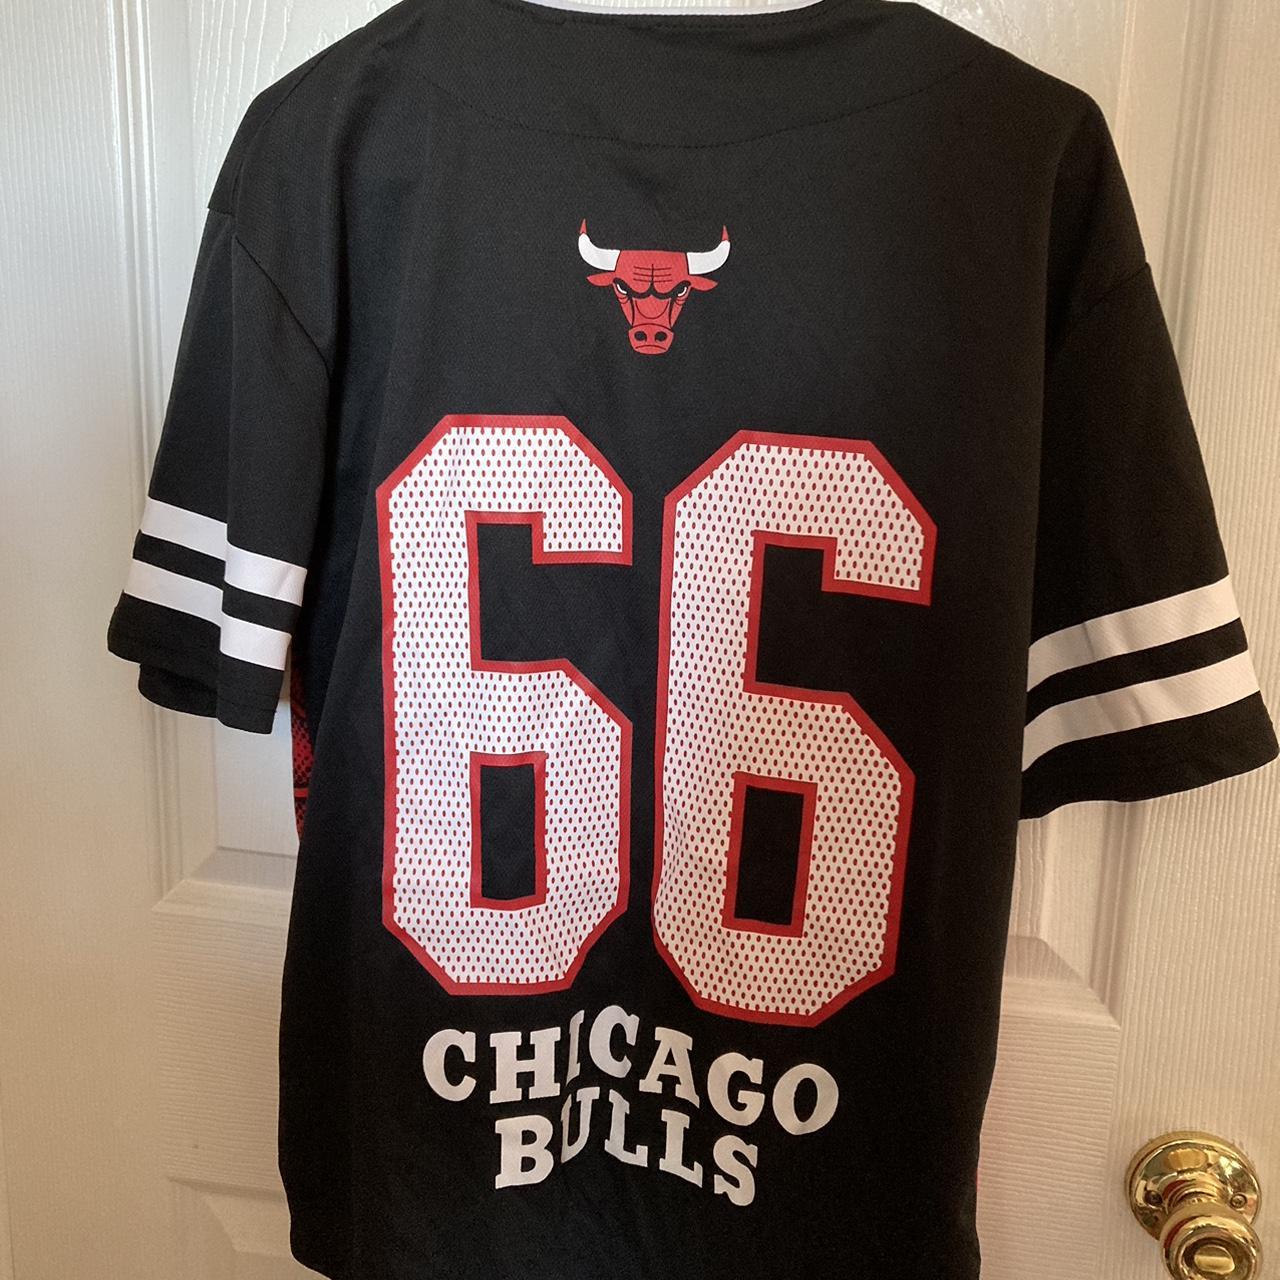 bulls 66 jersey